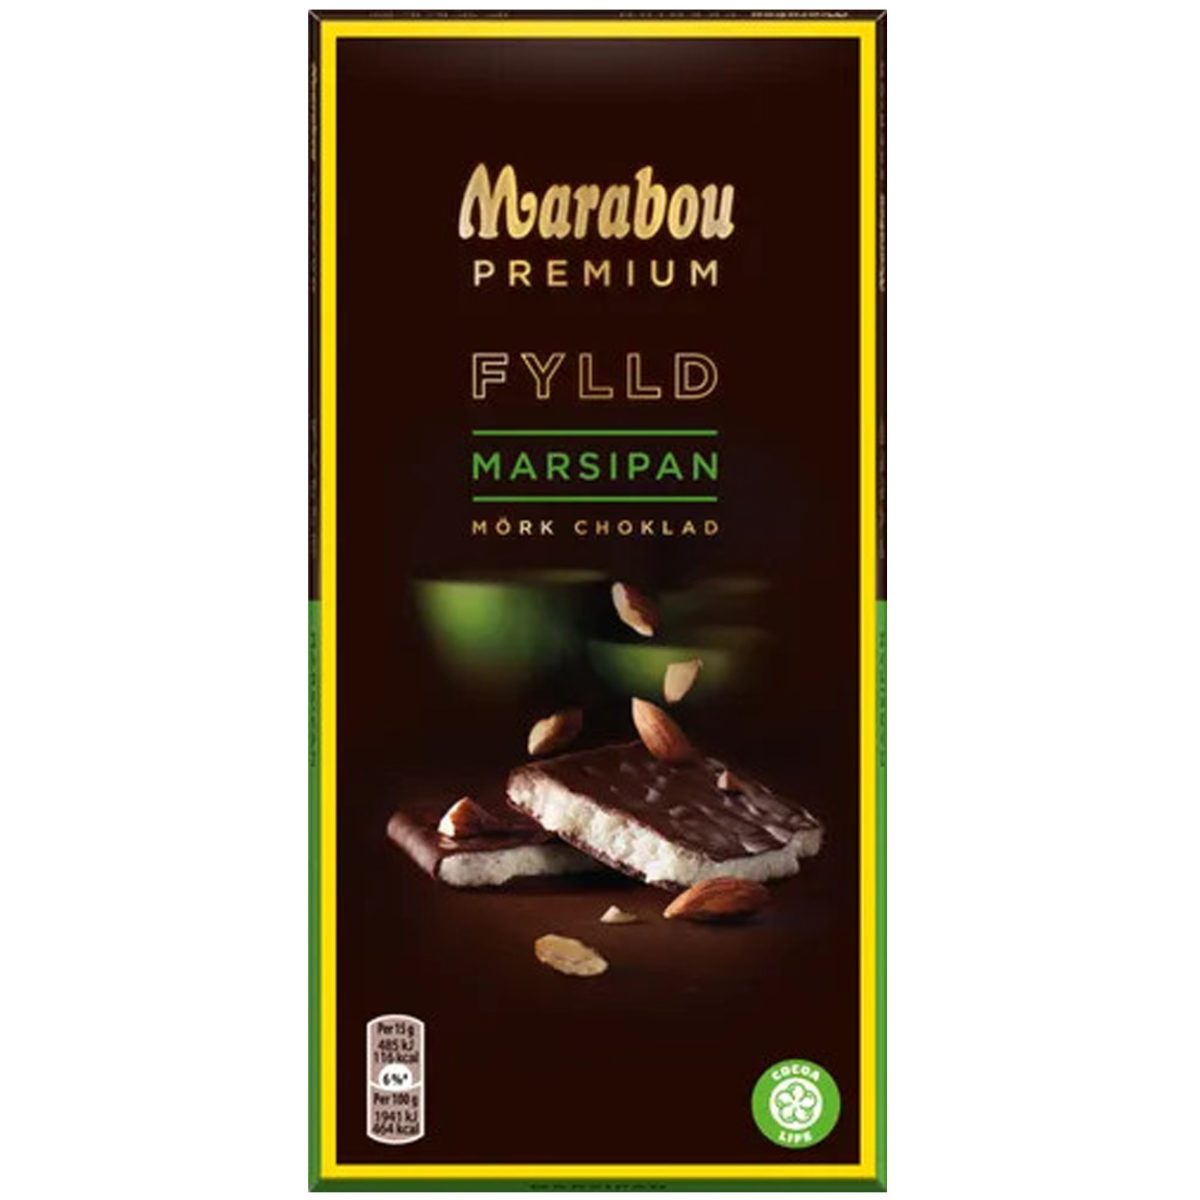 Marabou Premium Fylld Marsipan (150g) 1